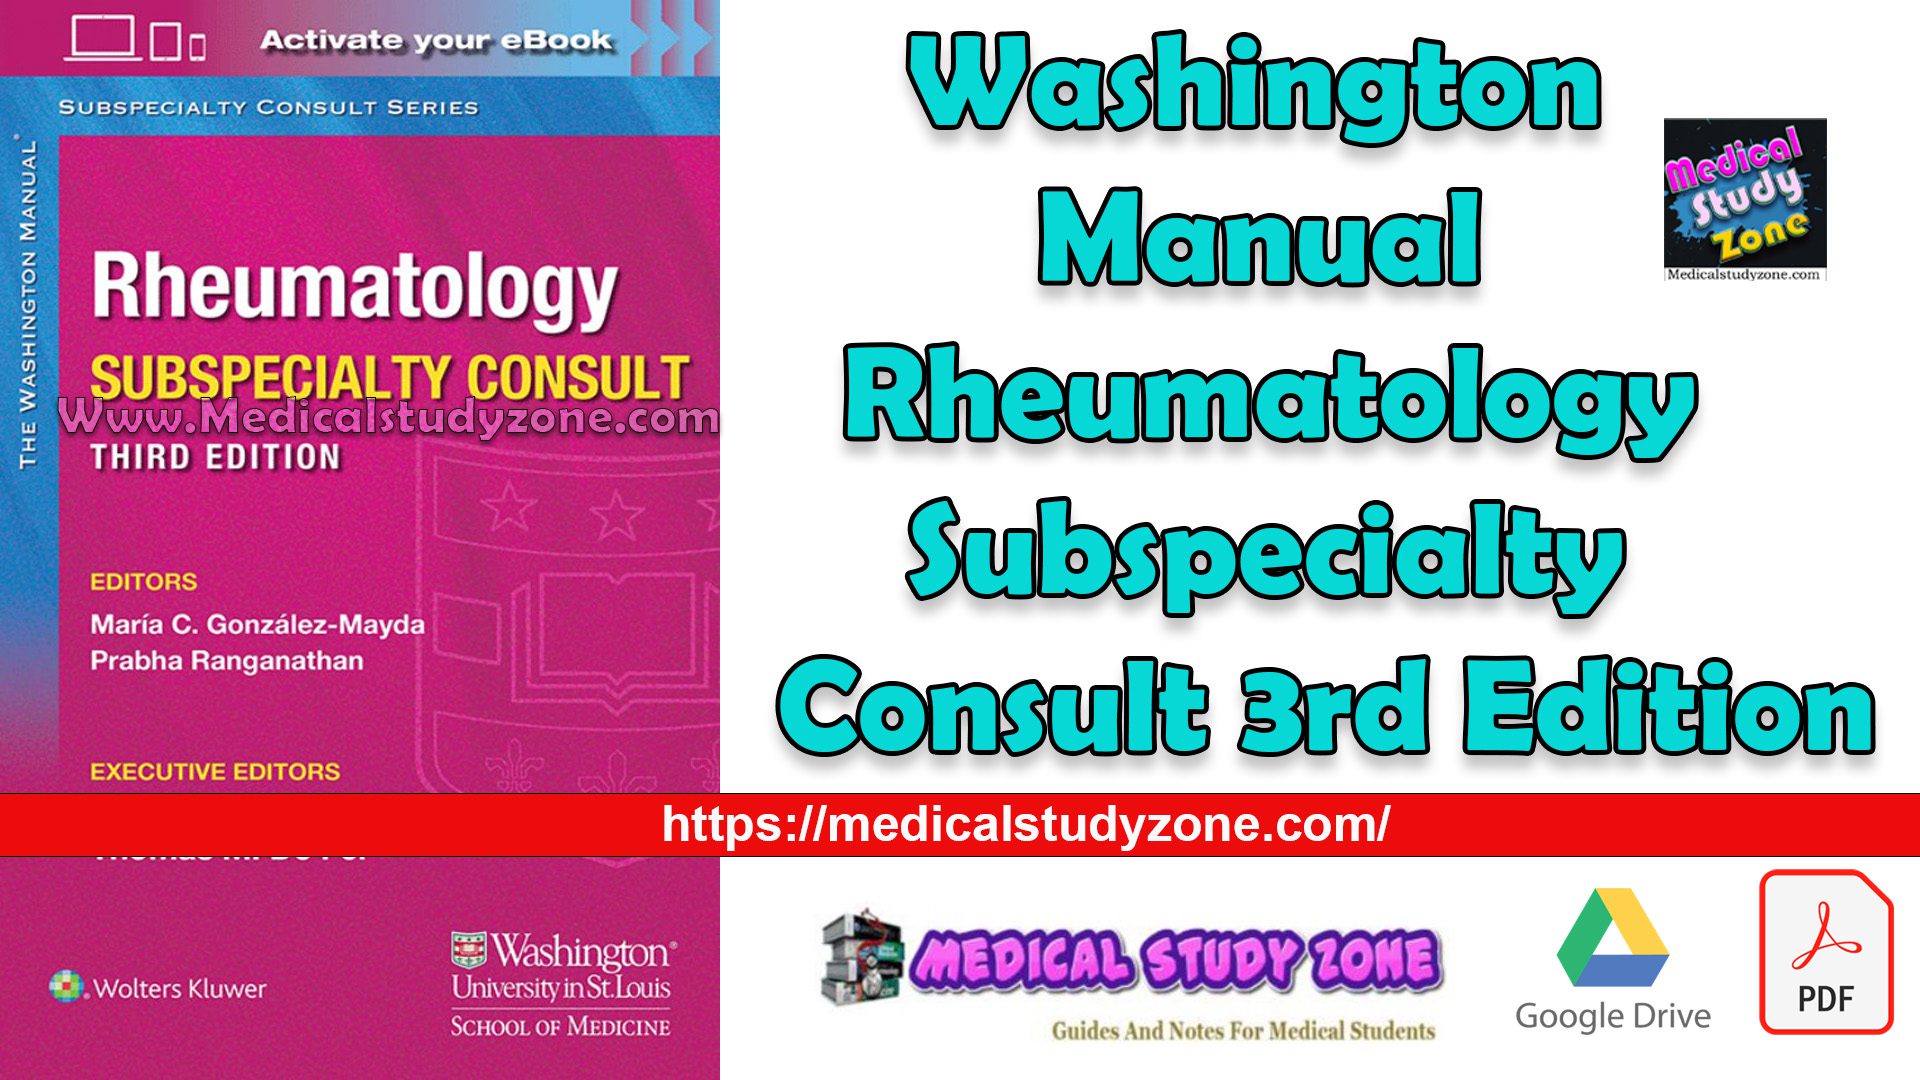 Washington Manual Rheumatology Subspecialty Consult 3rd Edition PDF Free Download